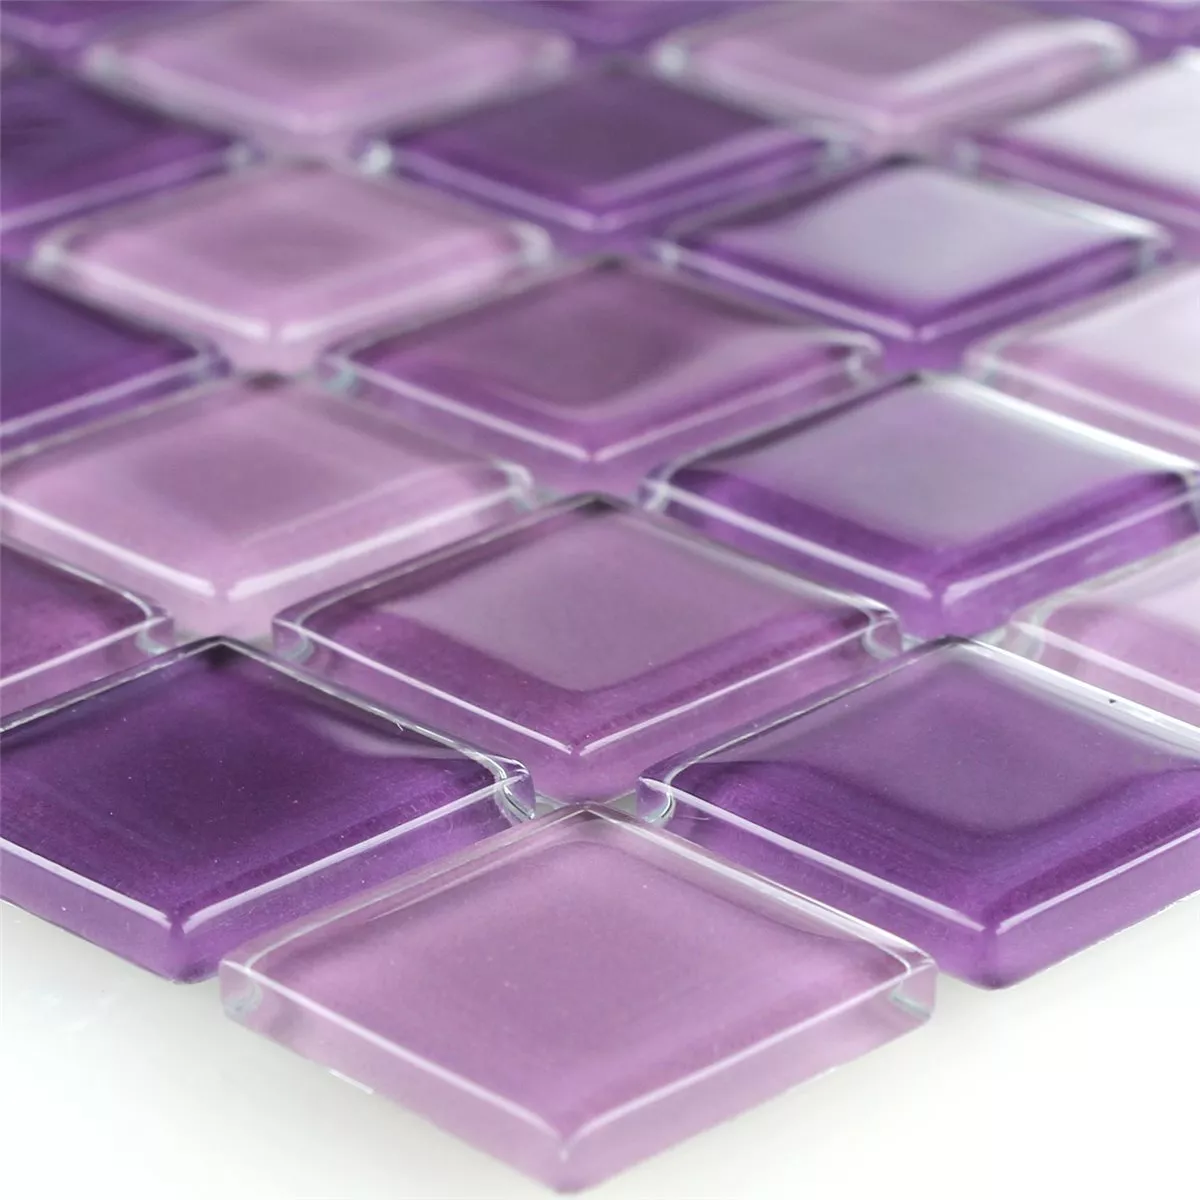 Mosaico De Cristal Azulejos Púrpura Mezcla 25x25x4mm